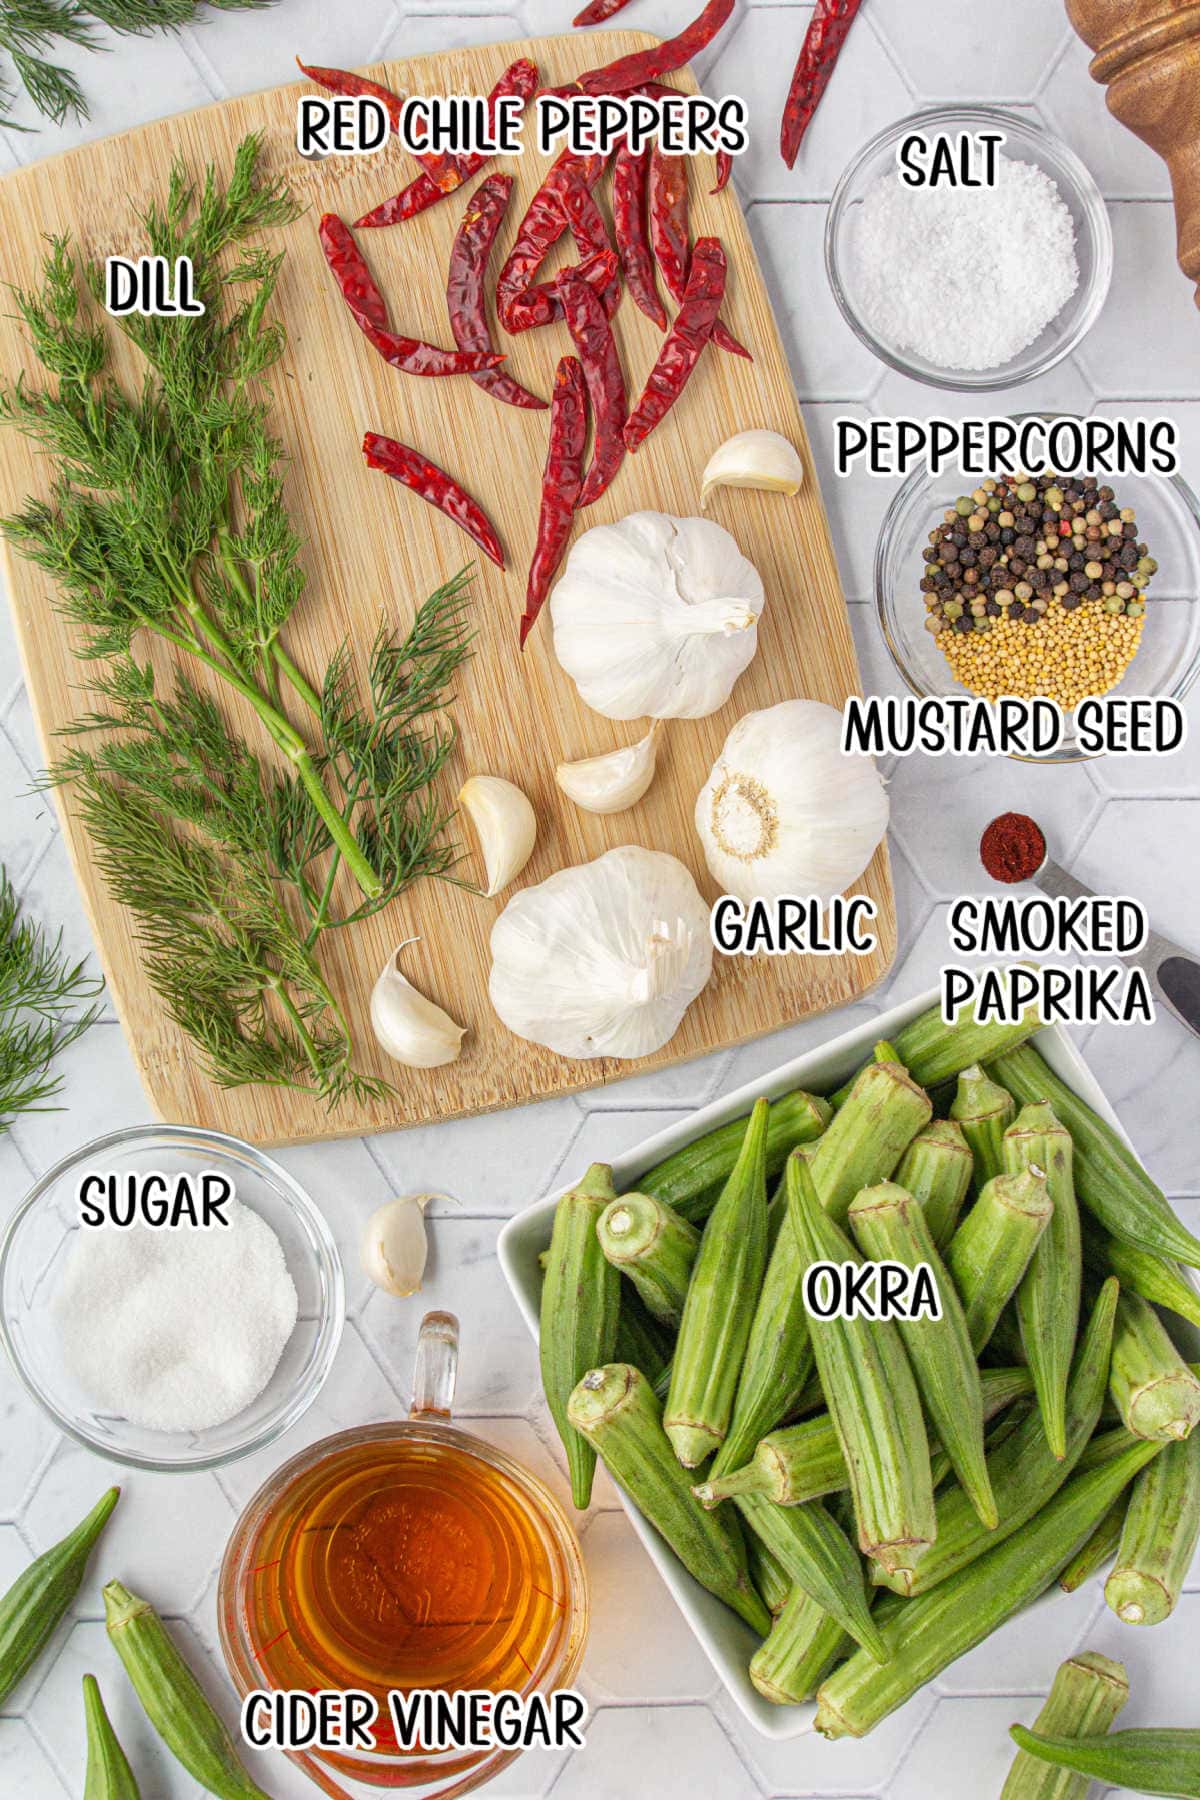 Labeled ingredients for pickled okra.